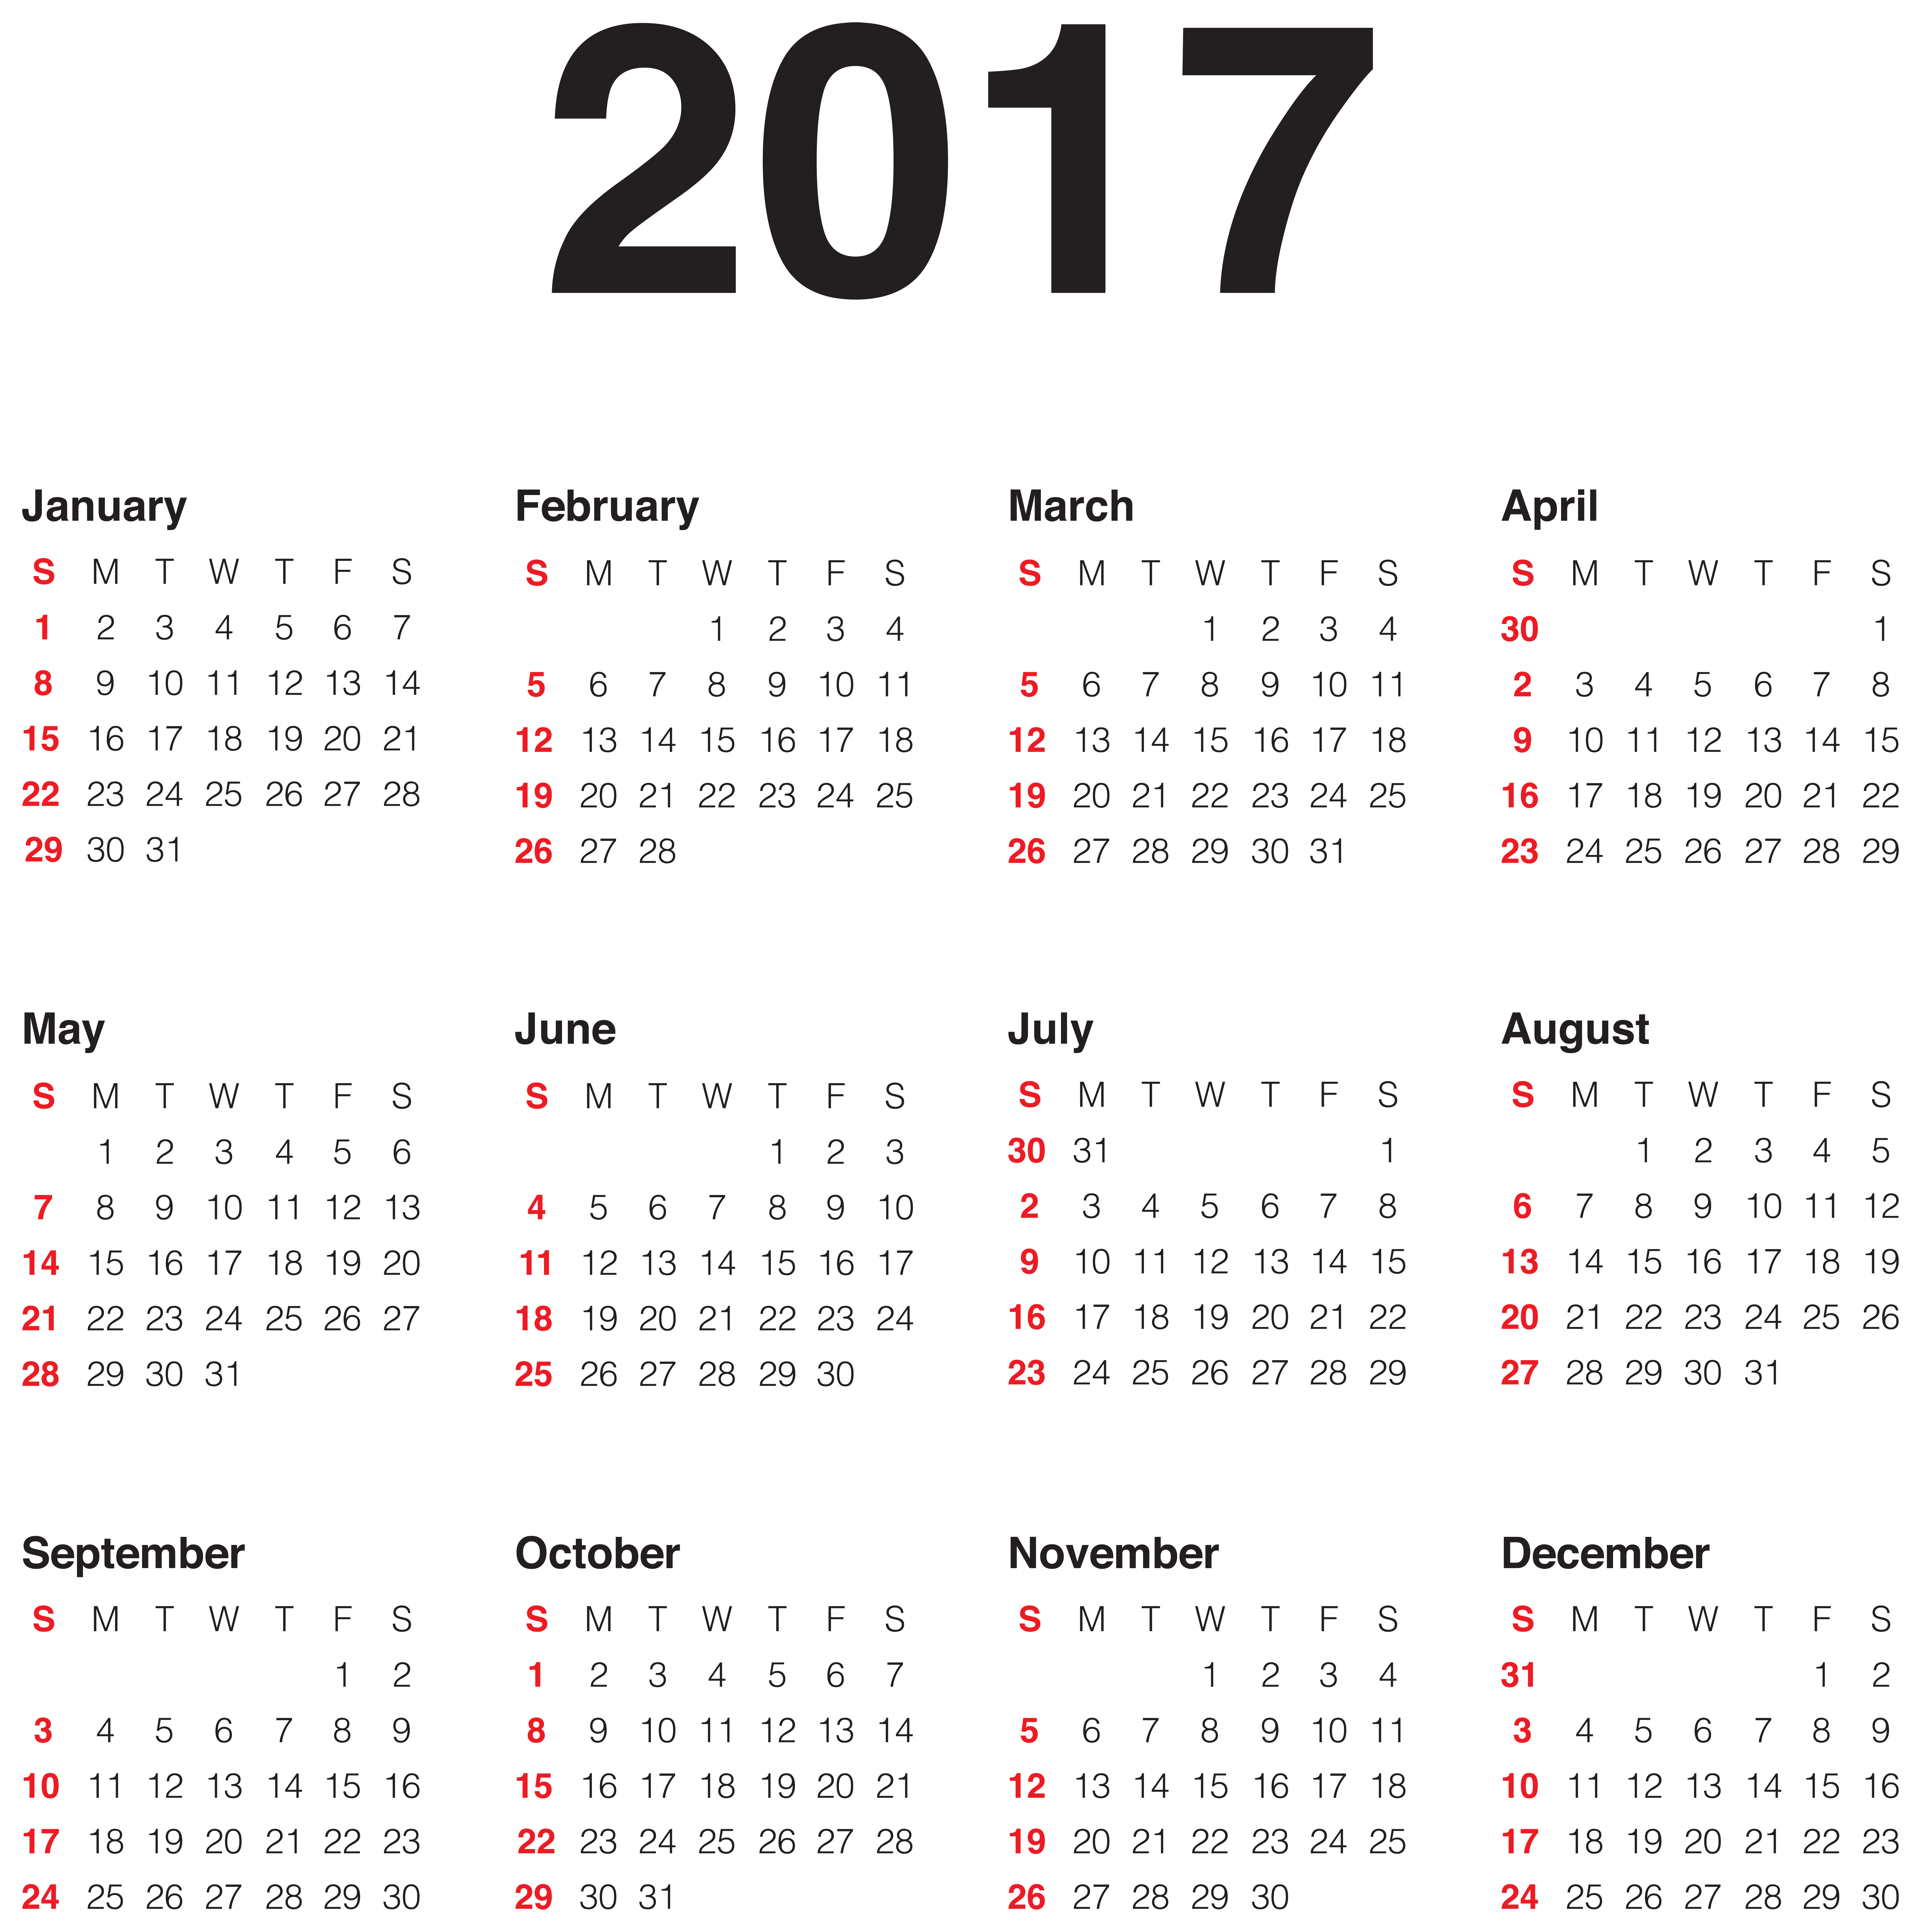 2017 Calendar Transparent PNG Clip Art Image